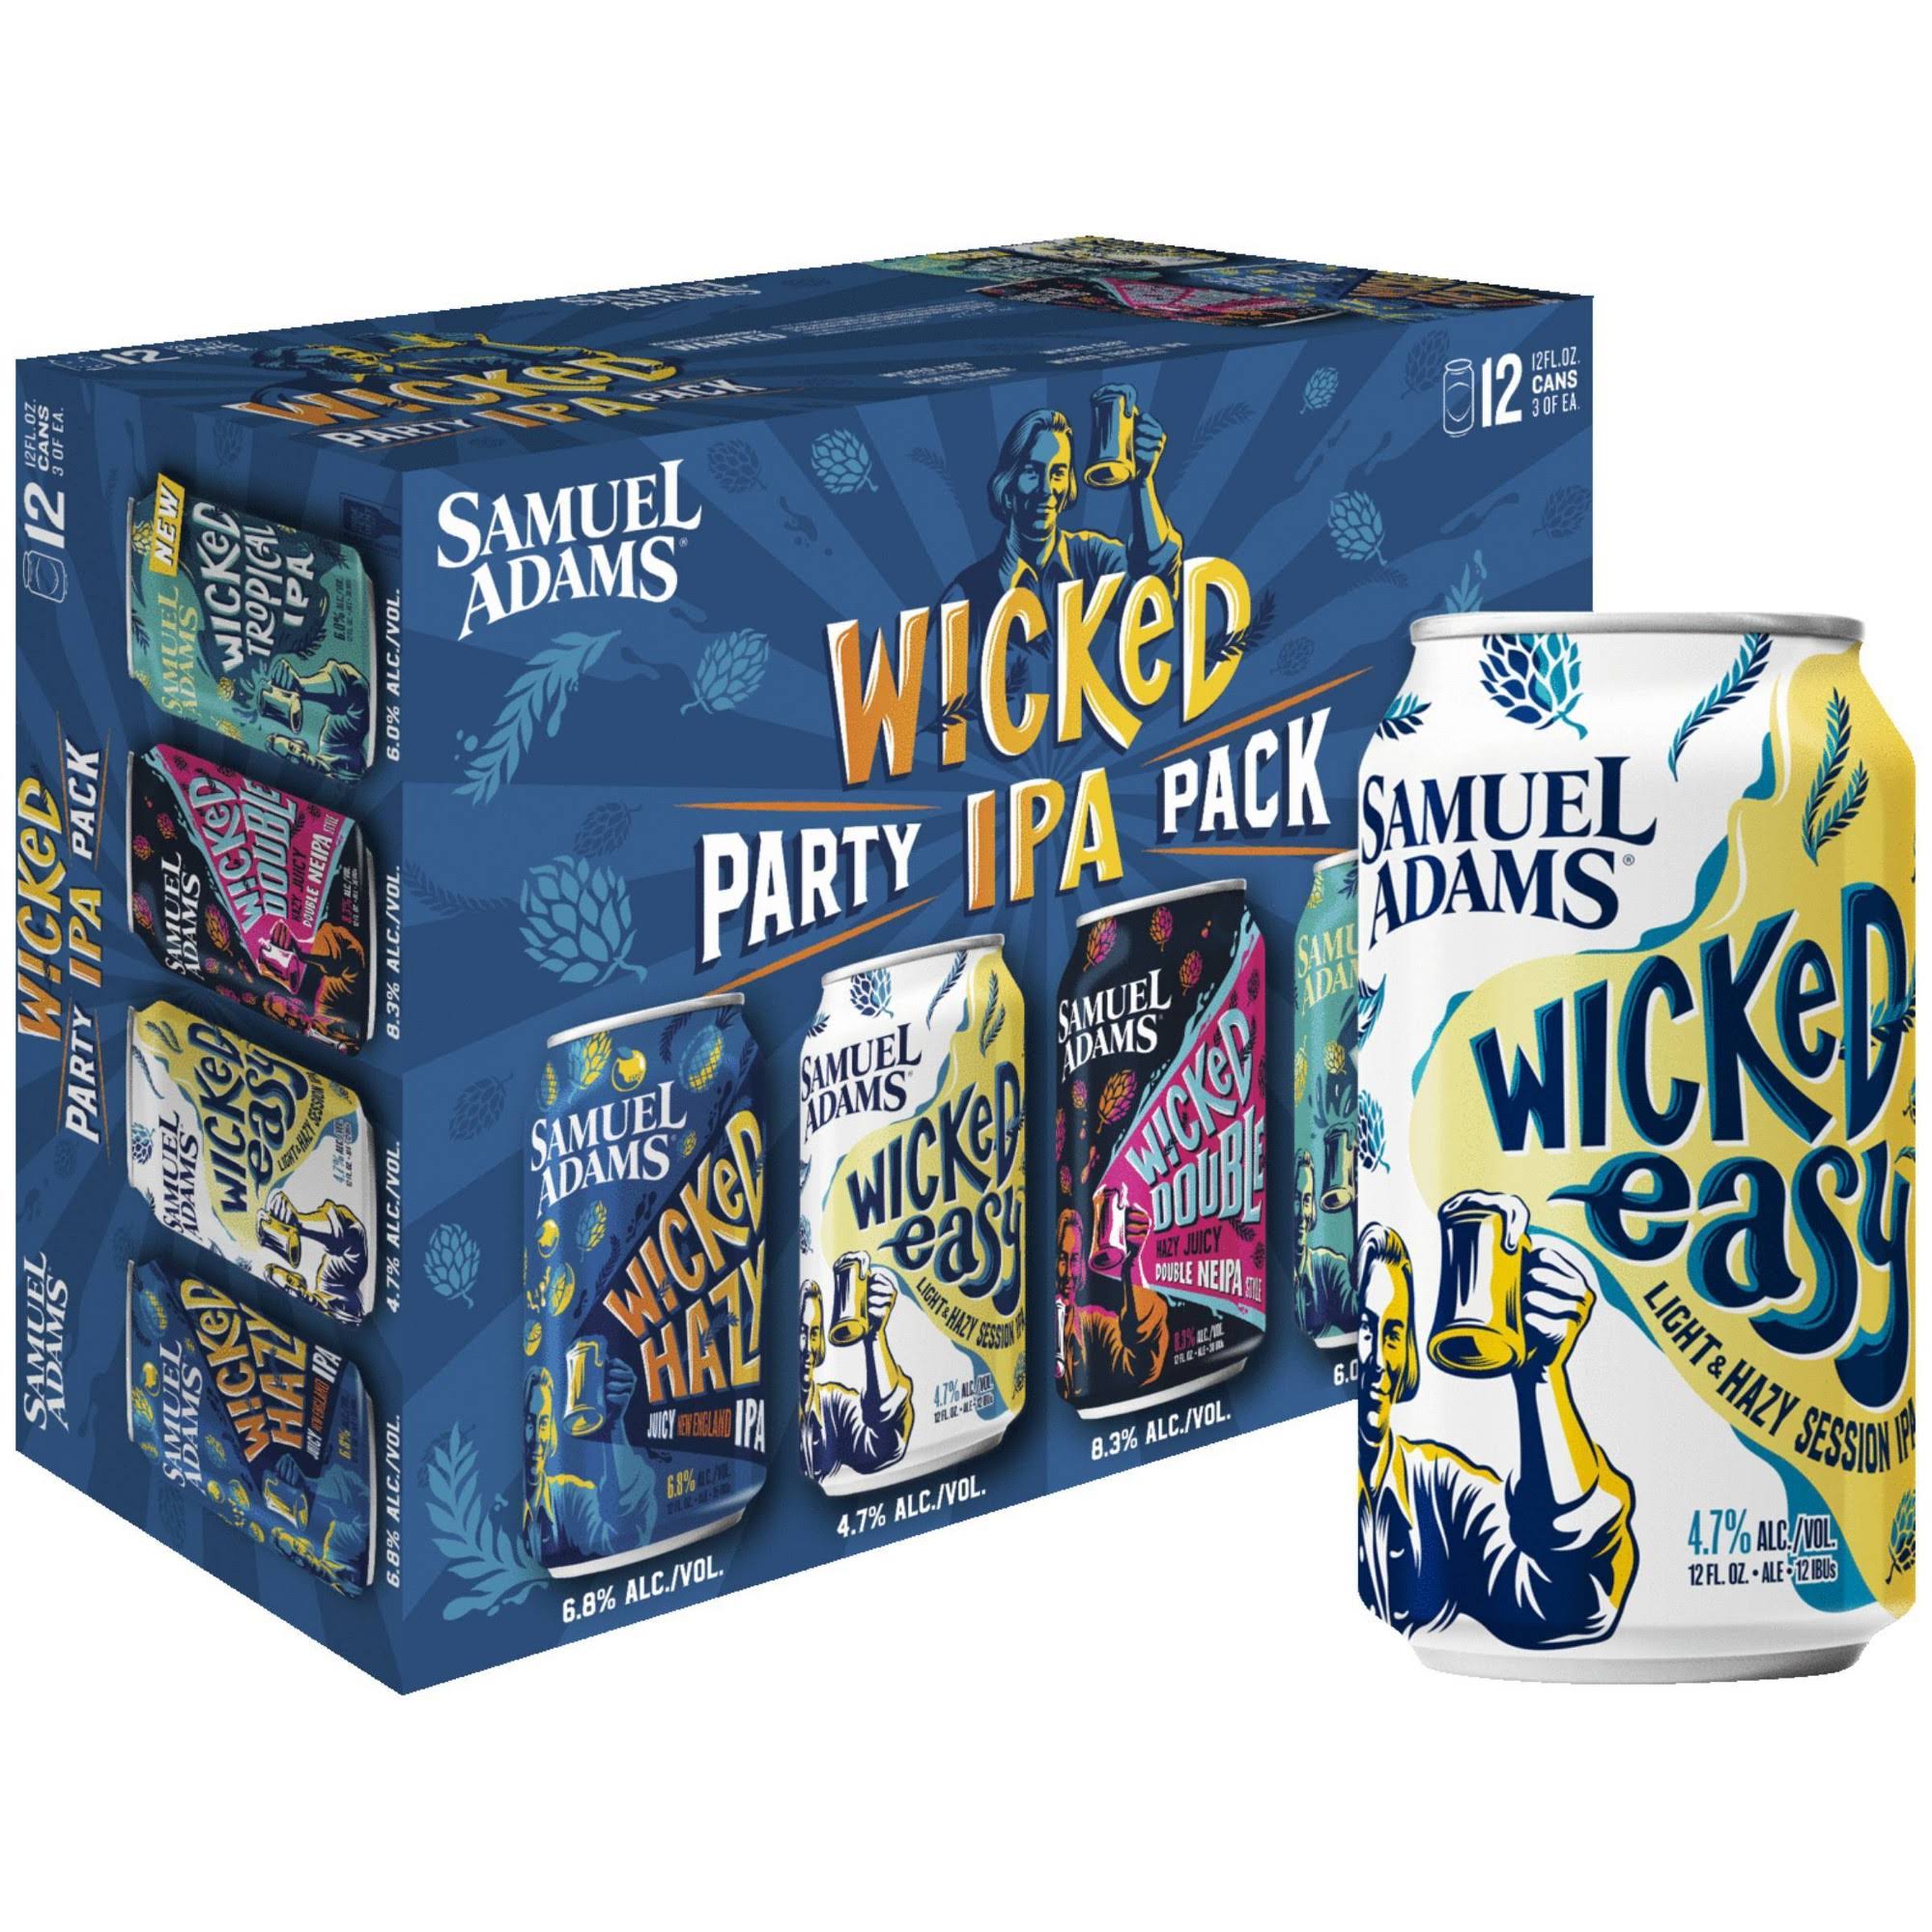 Samuel Adams Beer, Wicked IPA, Party Pack - 12 pack, 12 fl oz cans